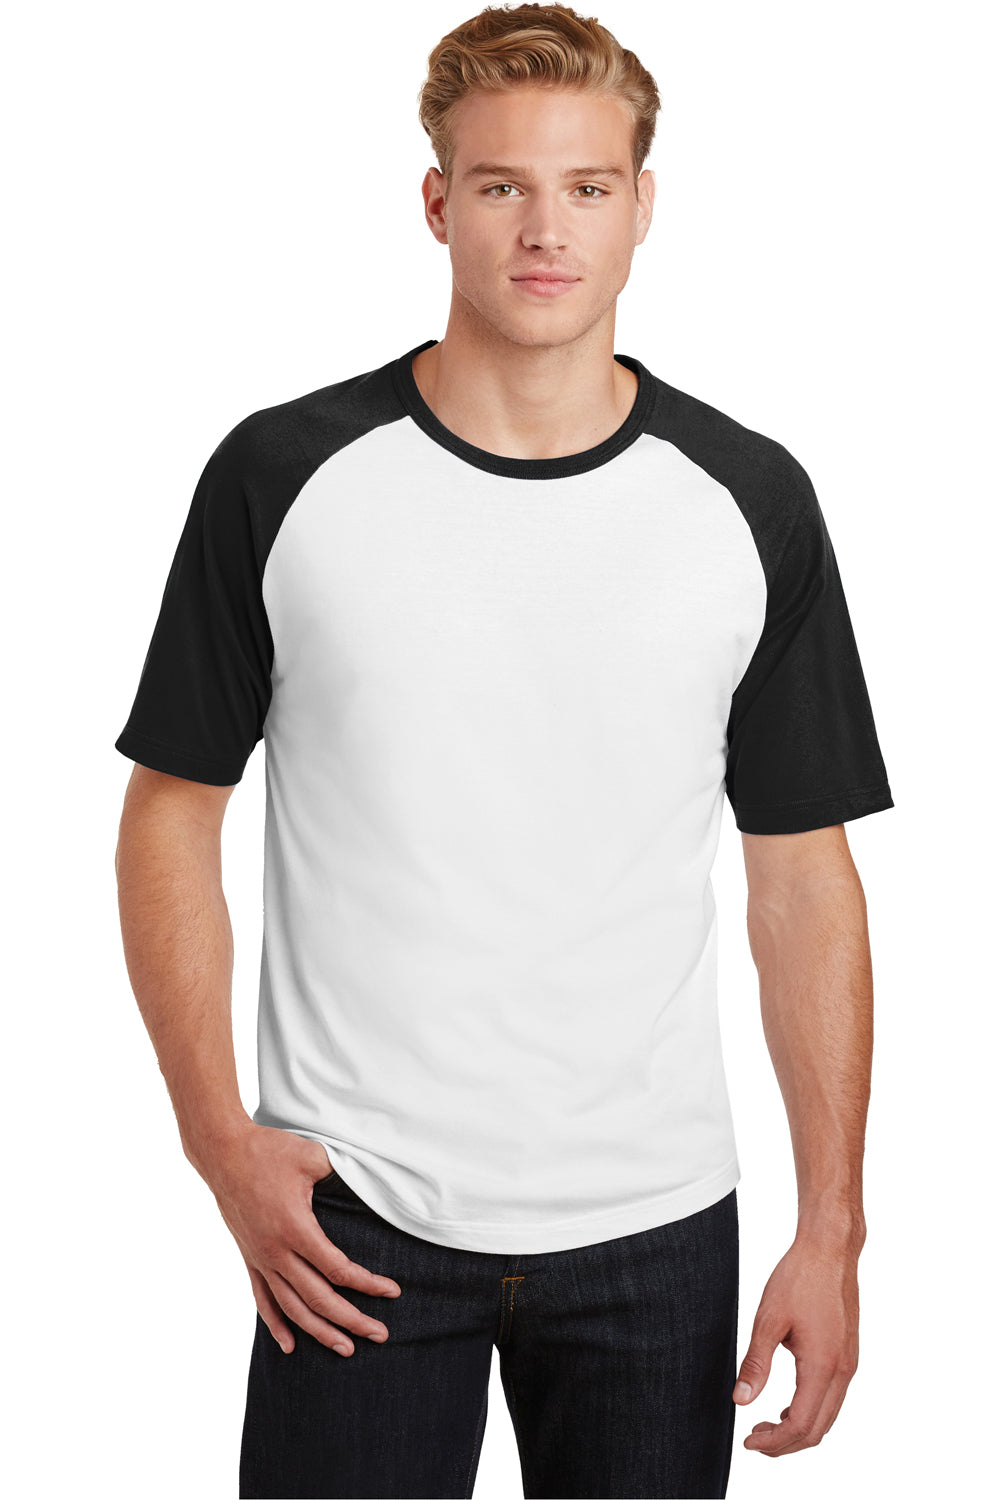 Sport-Tek T201 Mens Short Sleeve Crewneck T-Shirt White/Black Front